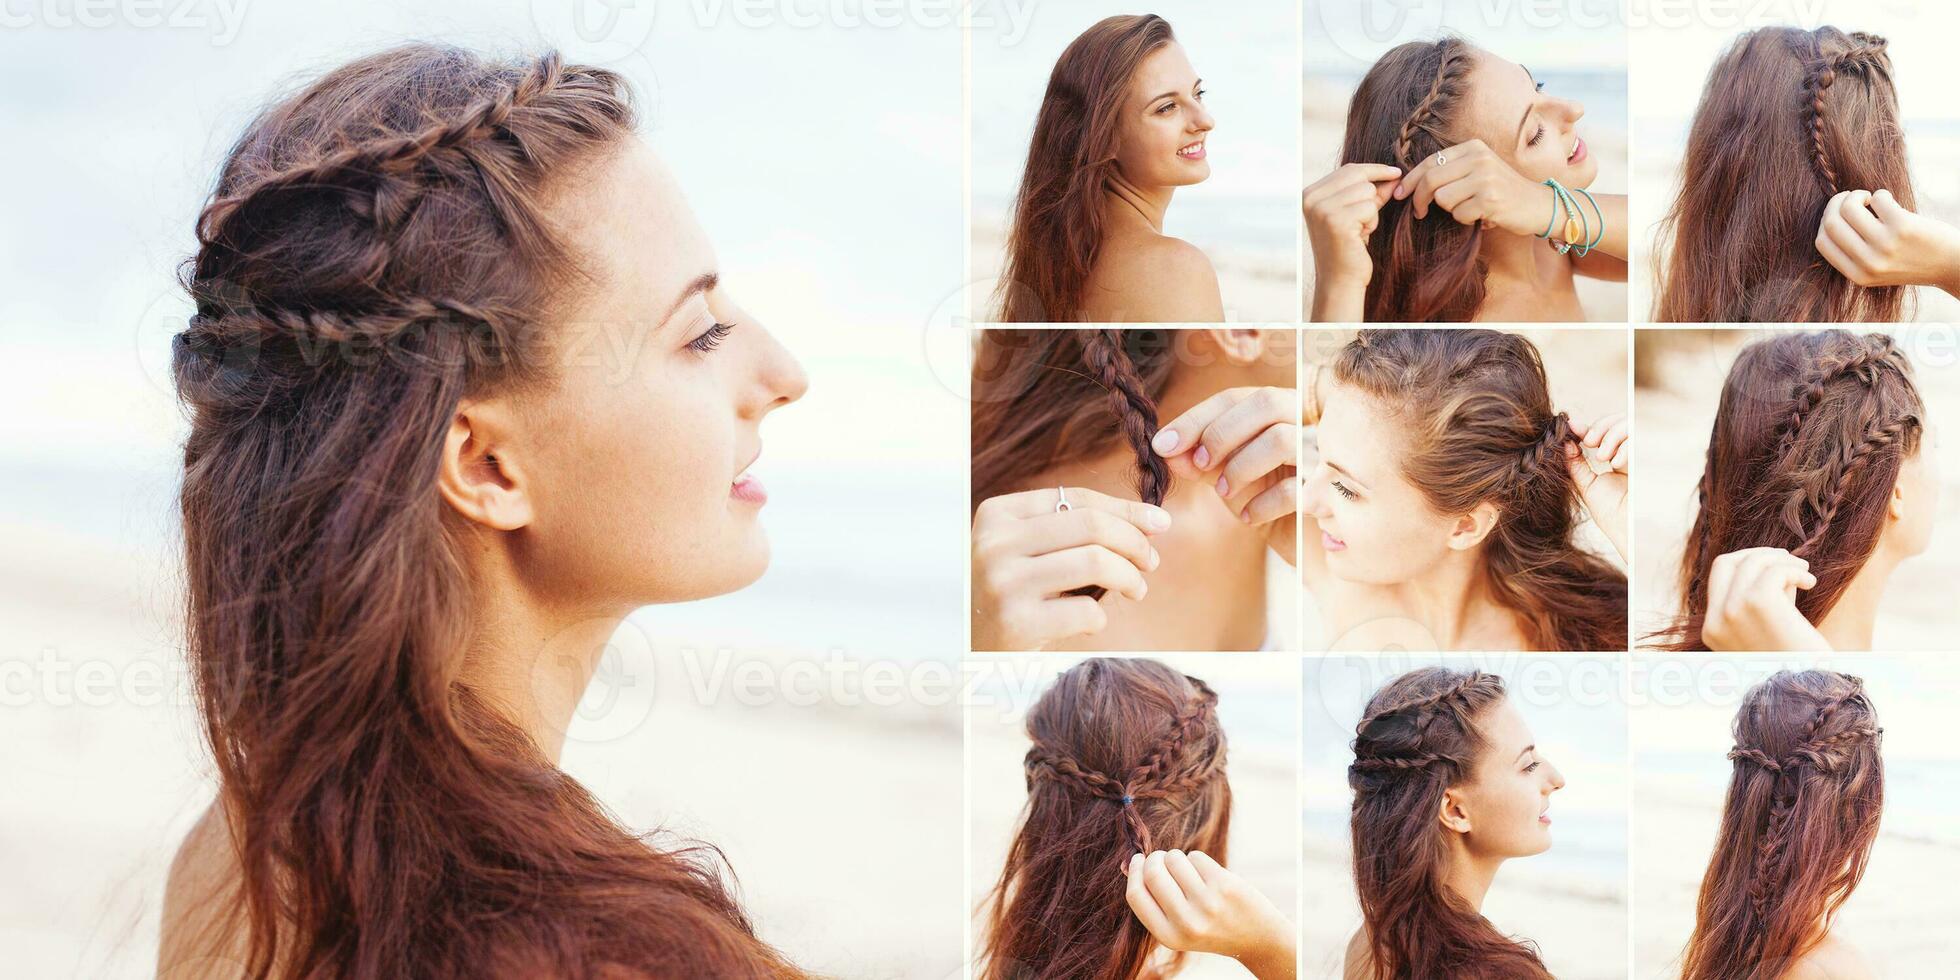 greek style beach hairdo tutorial by beauty blogger photo